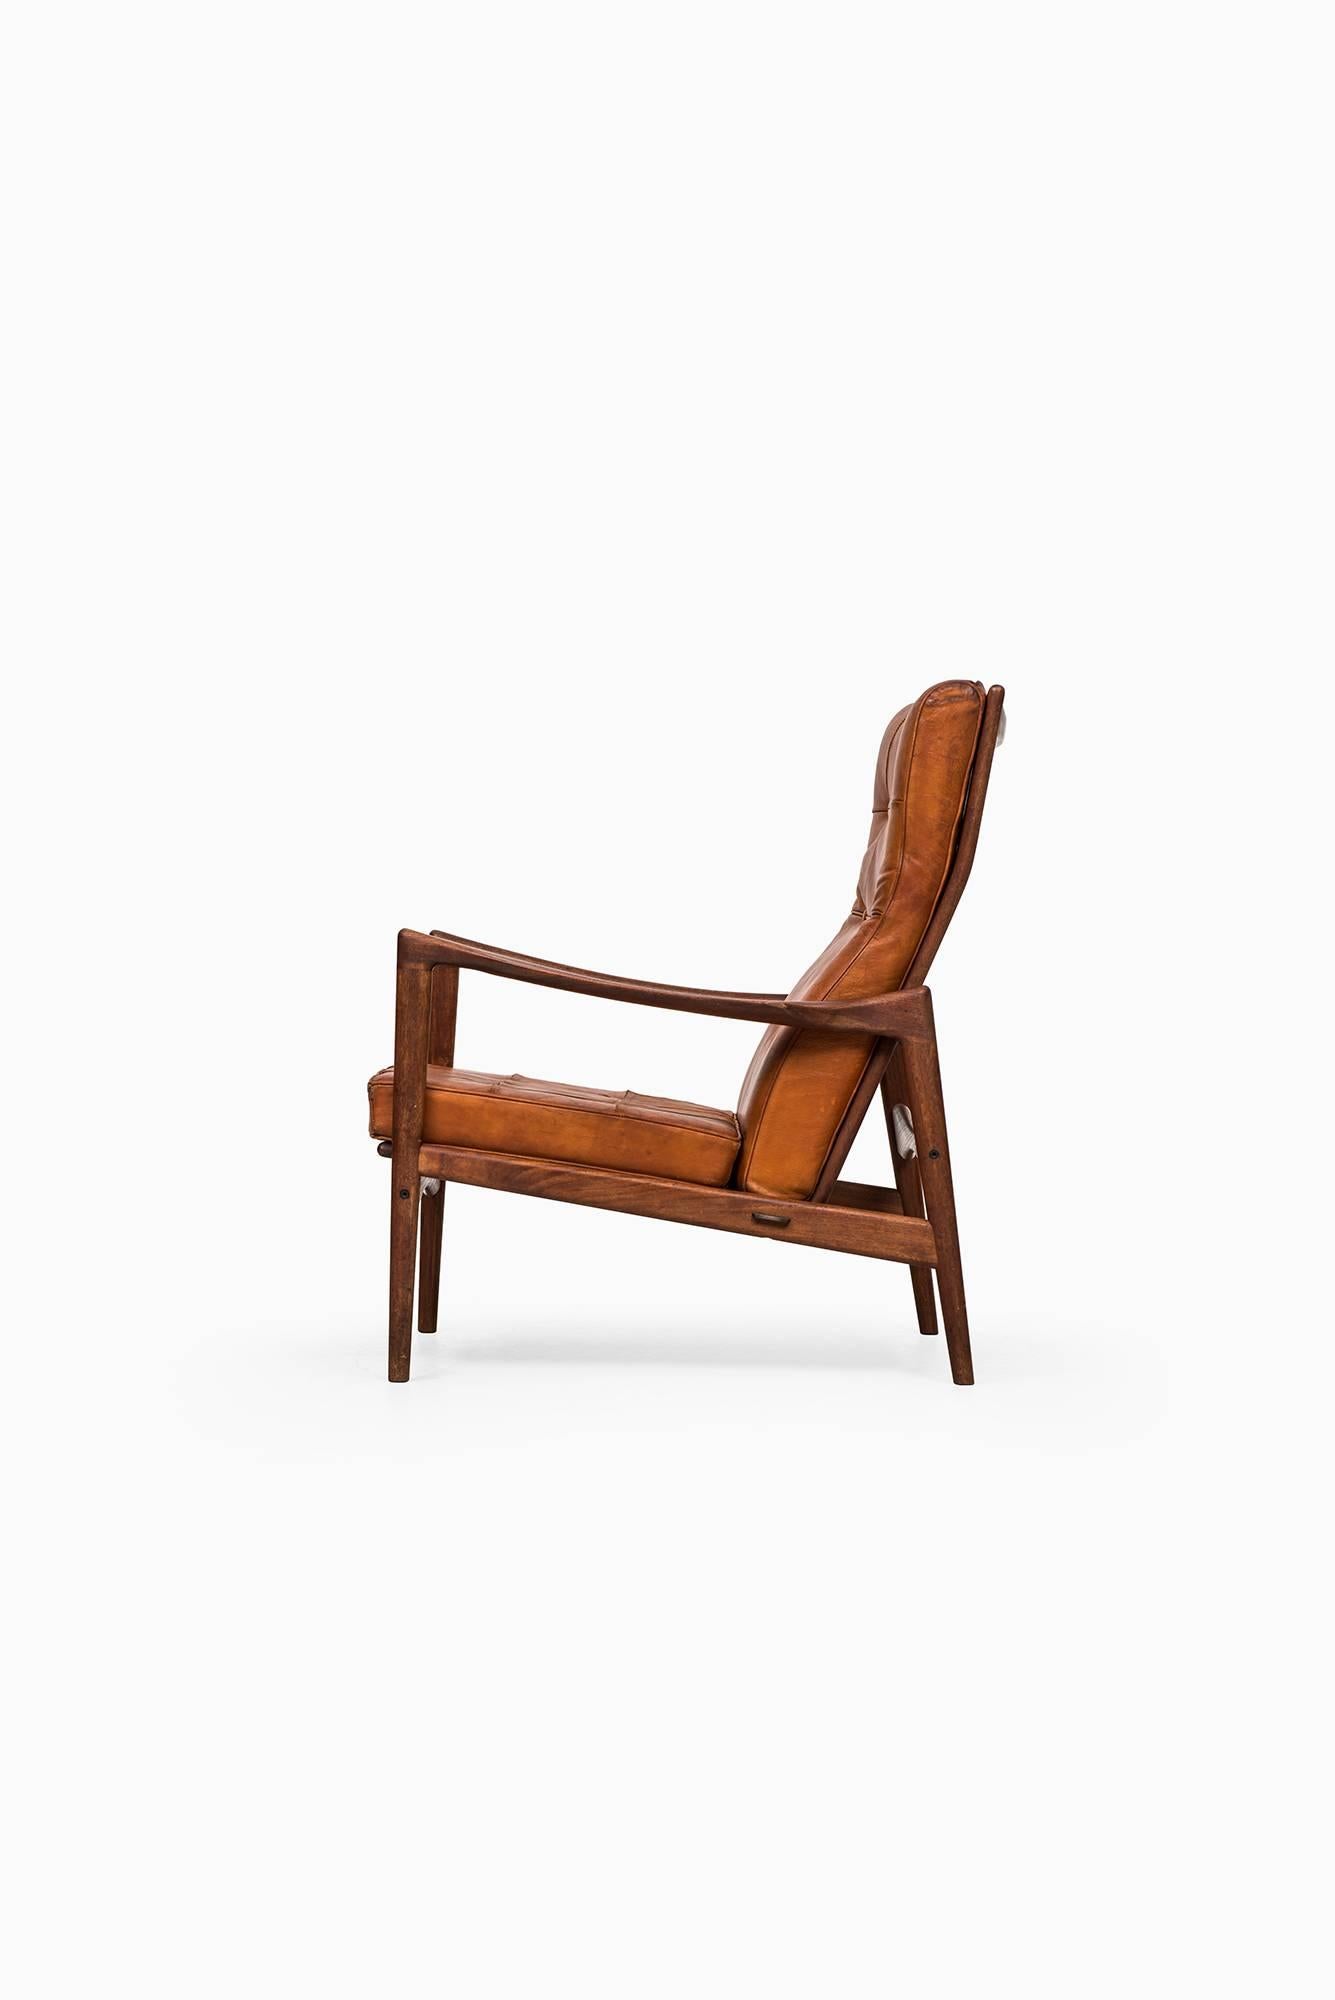 Leather Ib Kofod-Larsen Easy Chair Model Örenäs by OPE in Sweden